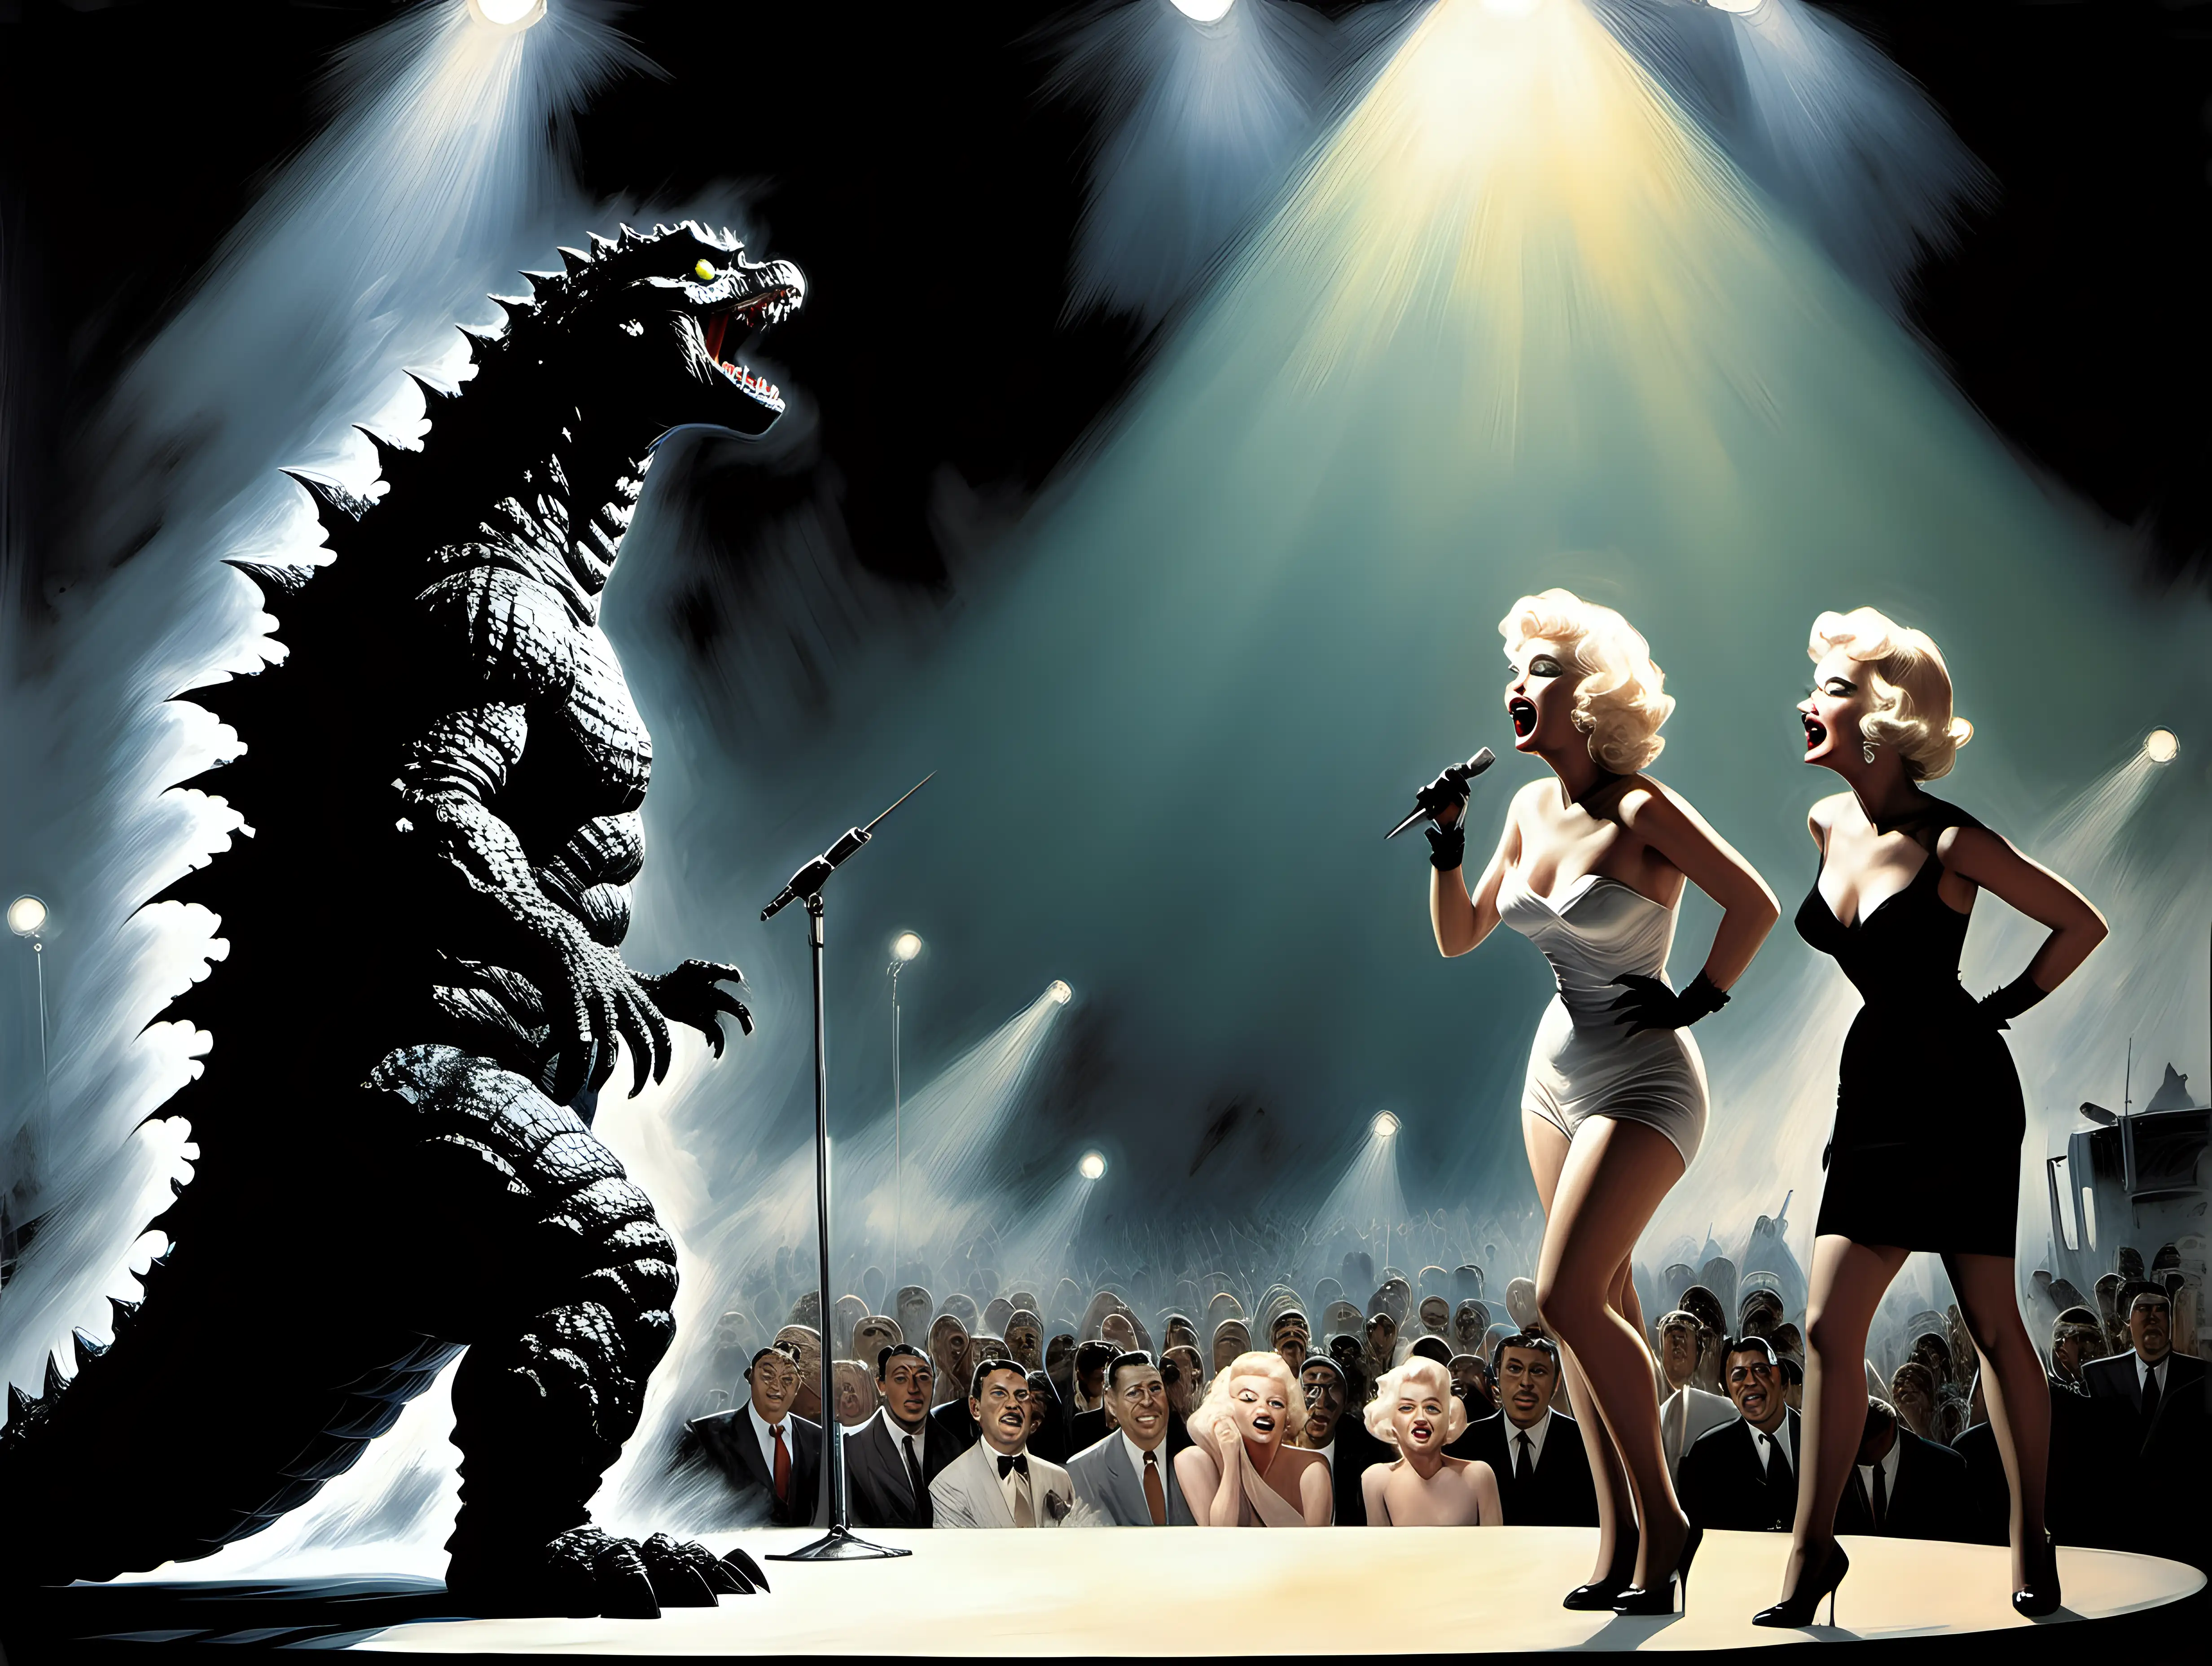 Legendary Trio Spotlighted on Stage Godzilla Frank Sinatra and Marilyn Monroe in Frank Frazetta Style Painting